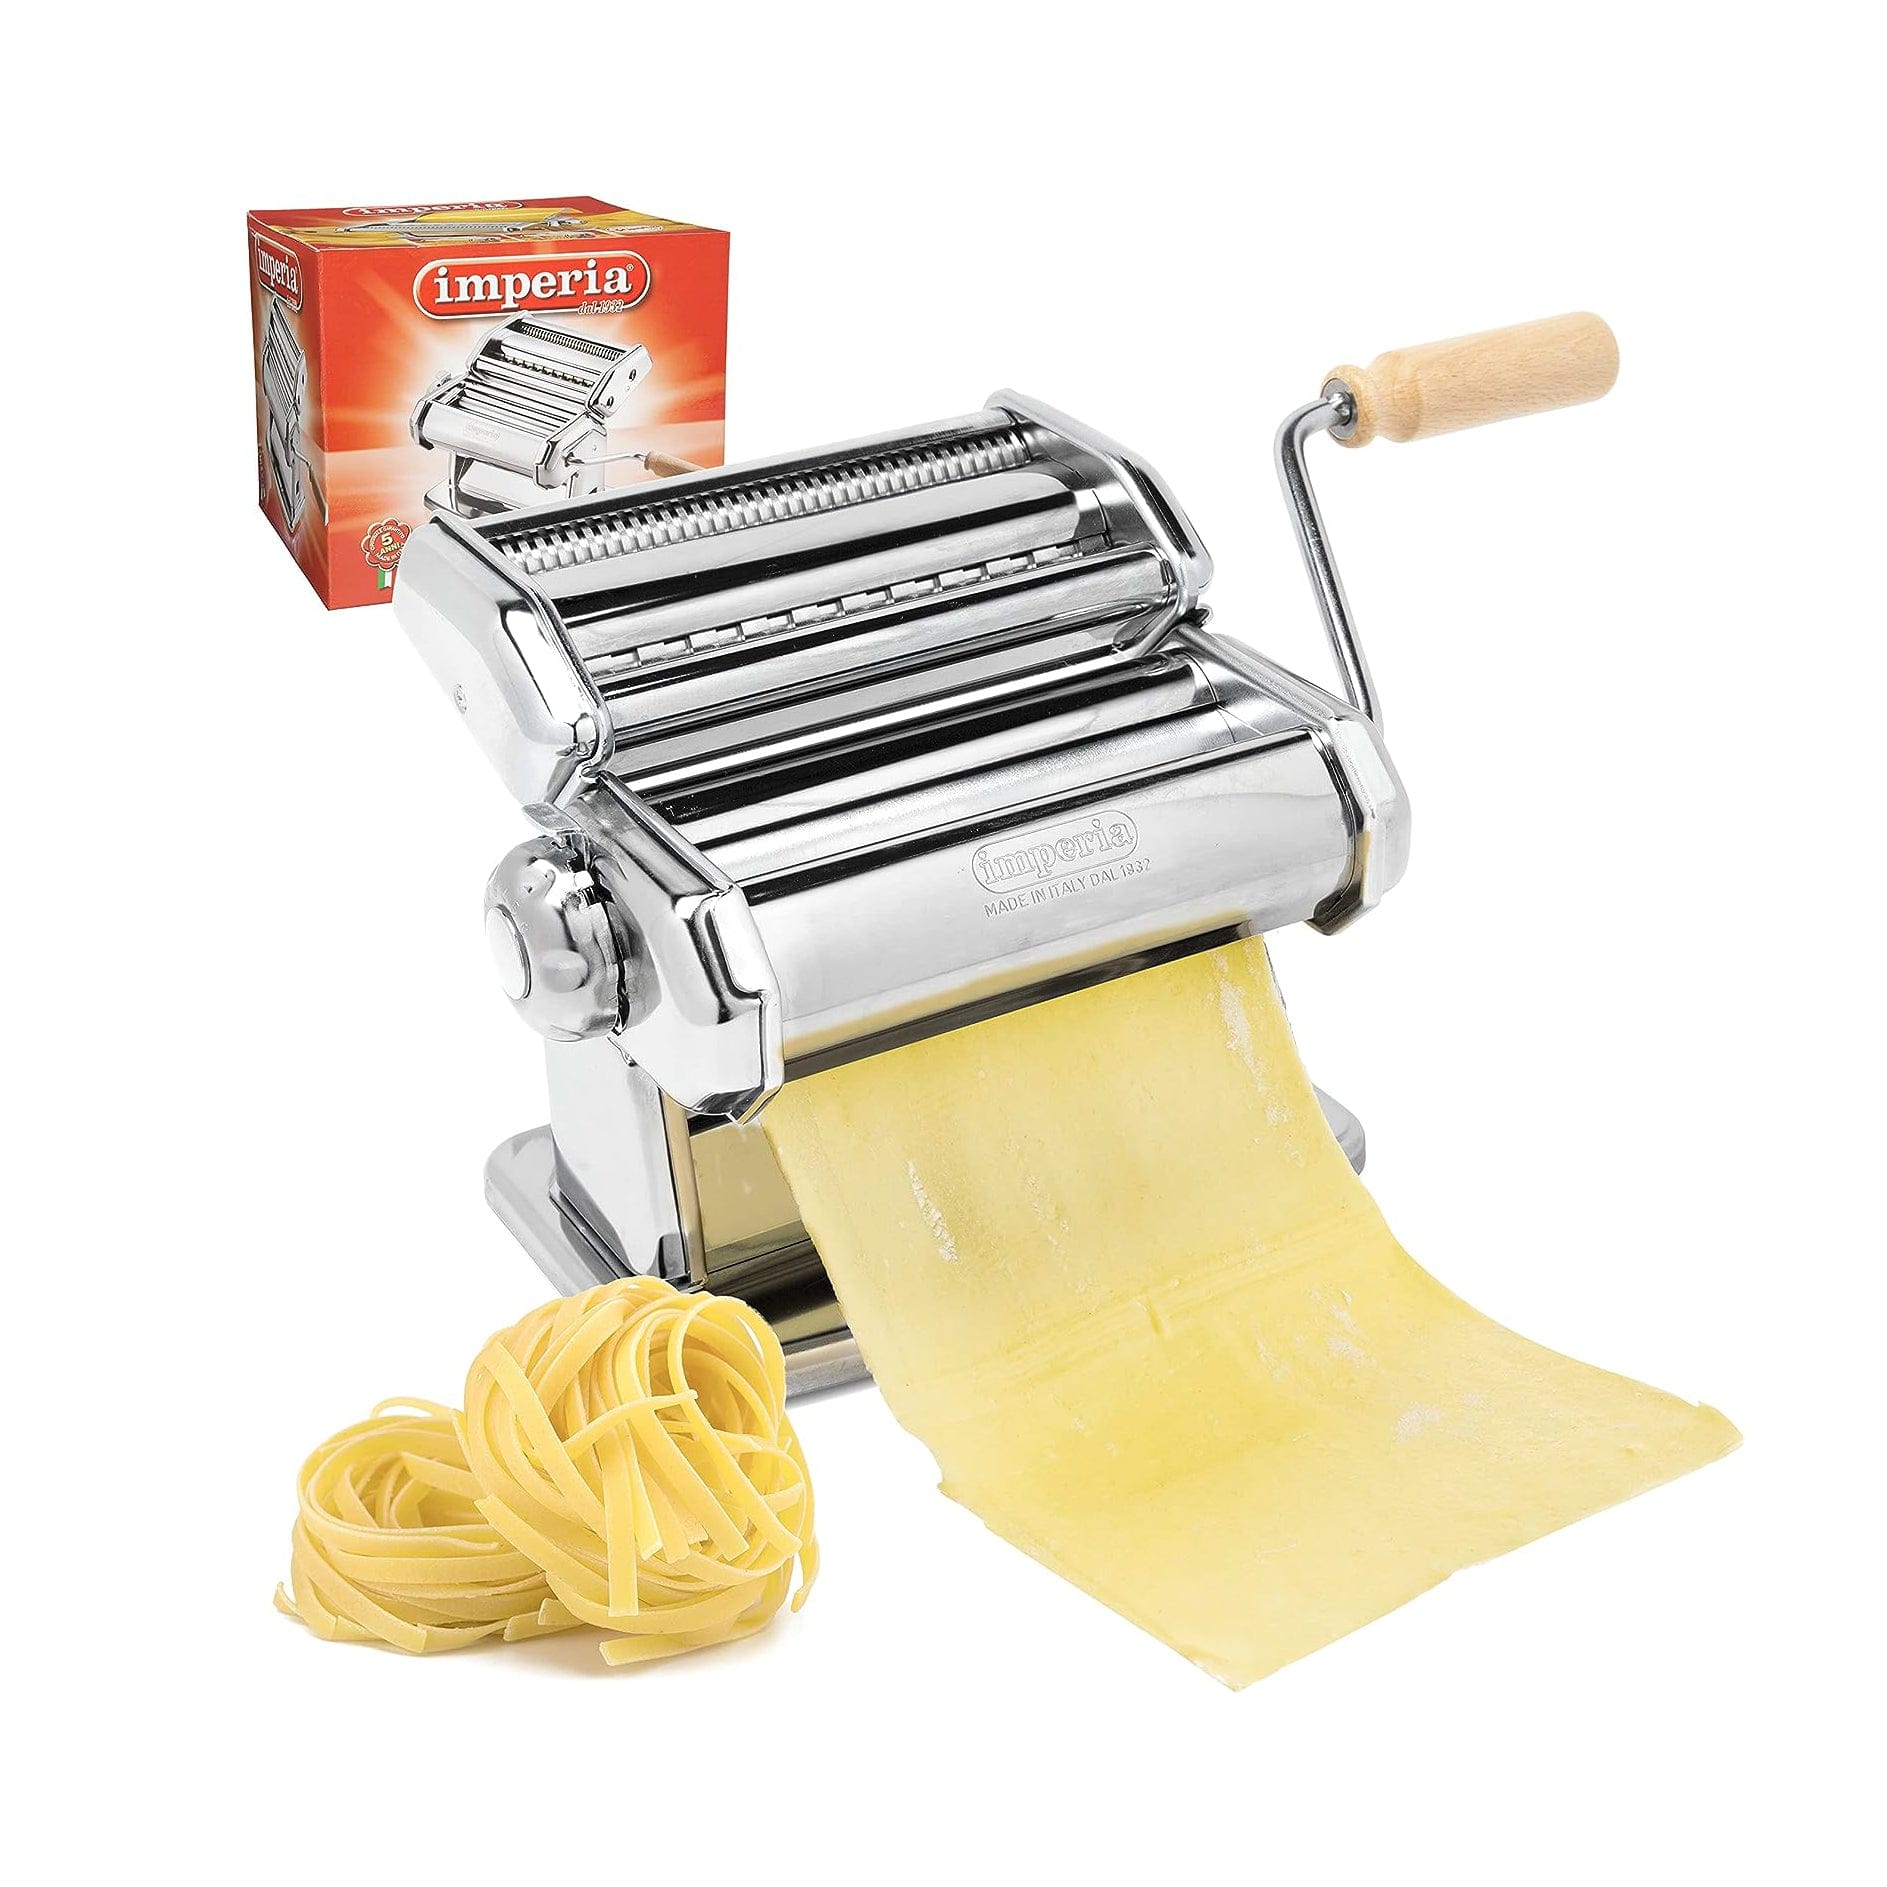 Imperia Pasta Maker Machine BRAND NEW